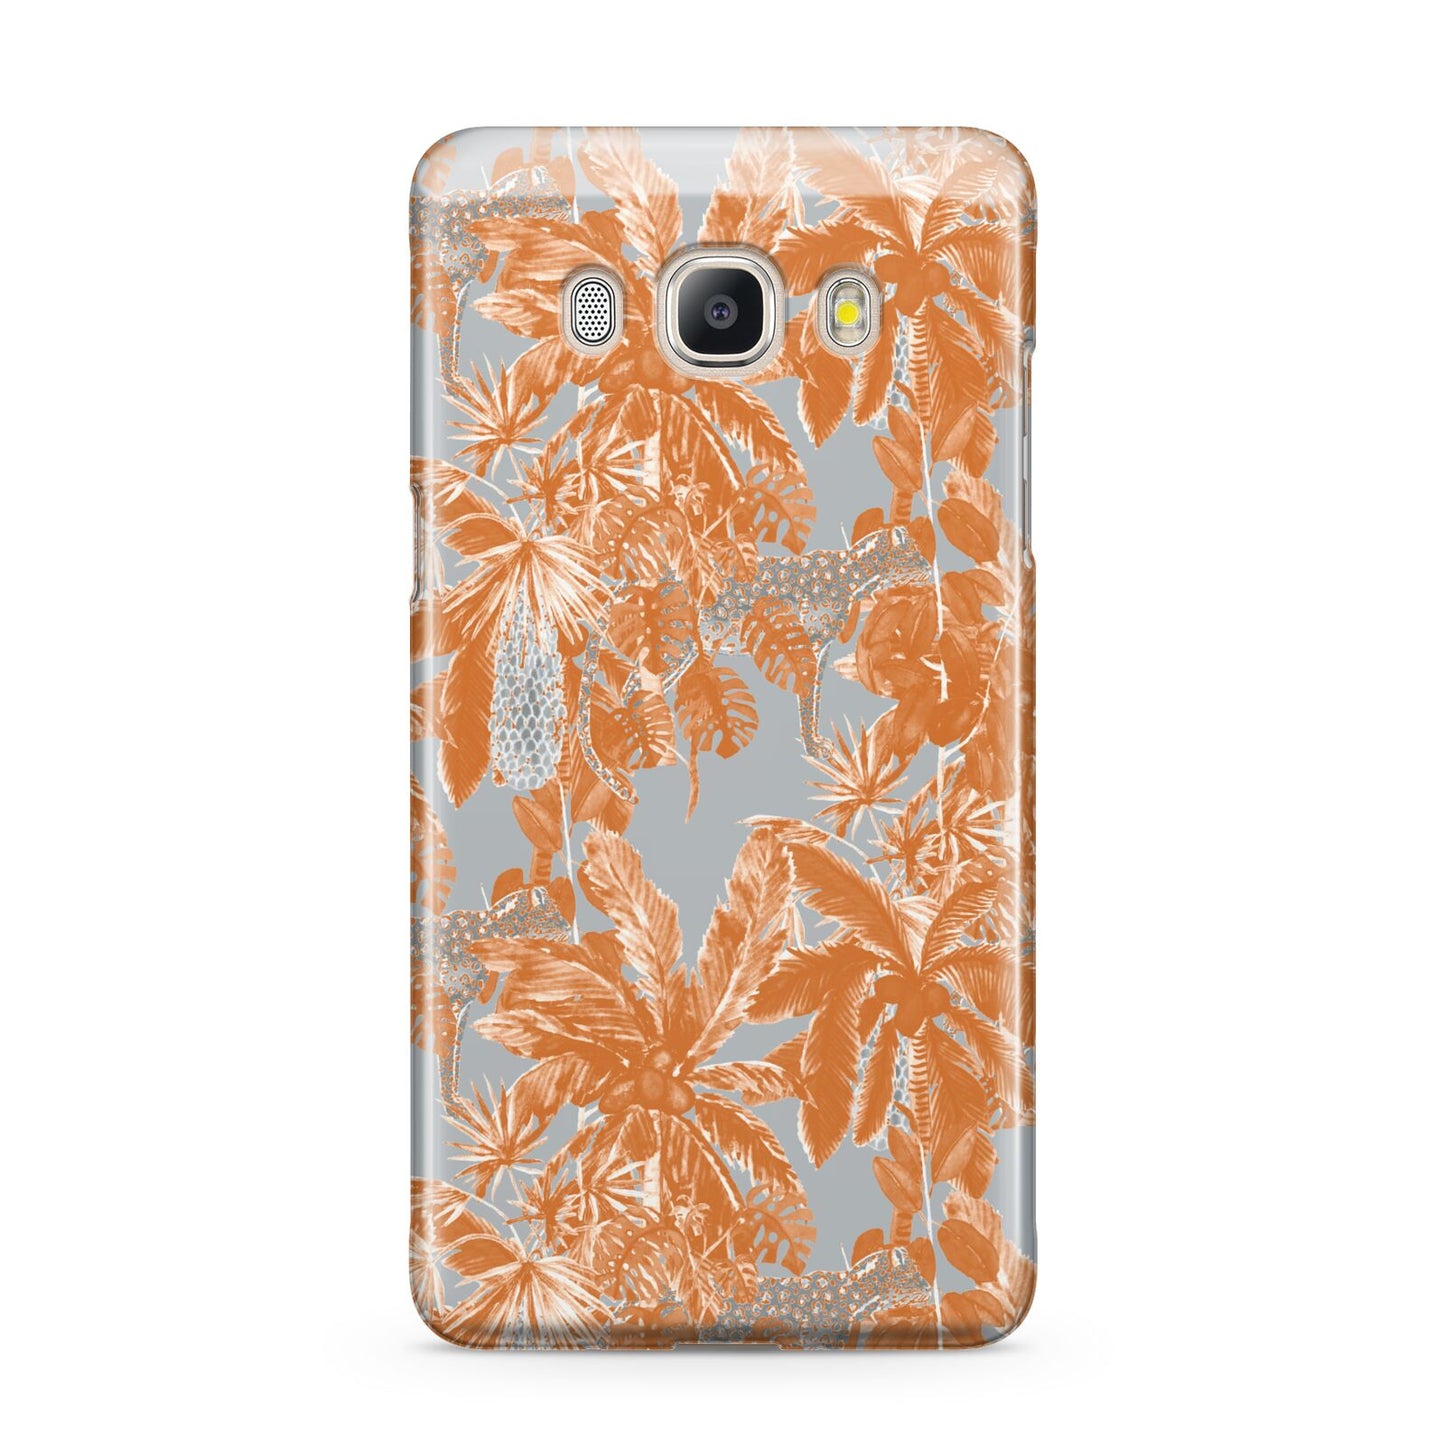 Tropical Samsung Galaxy J5 2016 Case